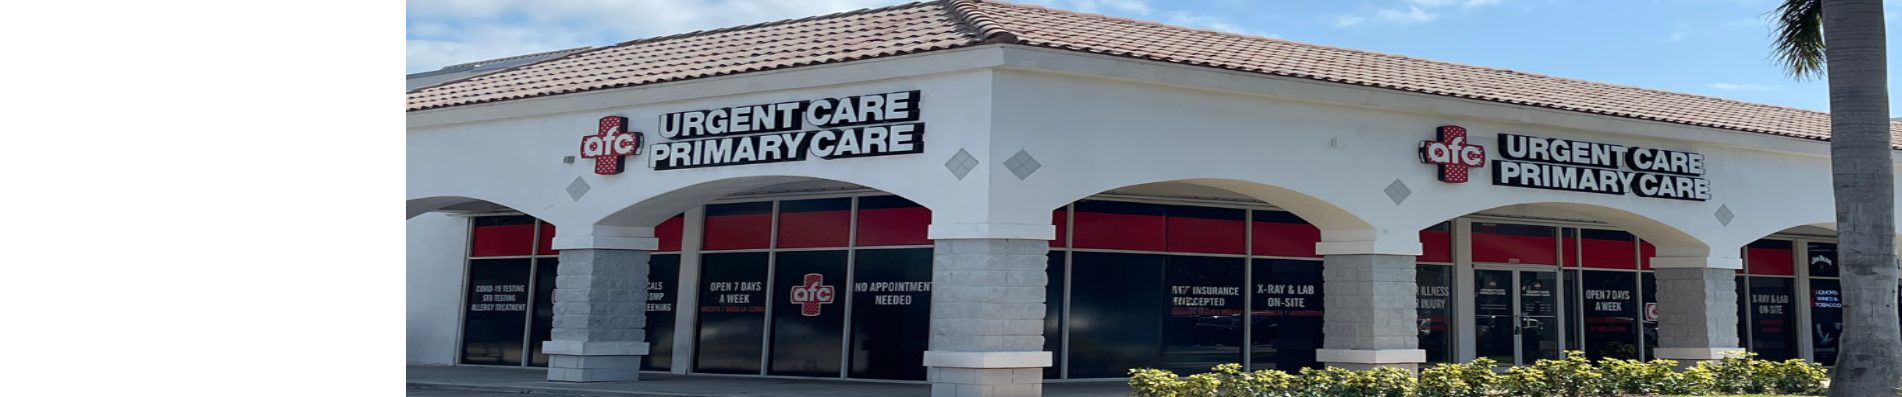 Visit our urgent care center in Hallandale Beach, FL